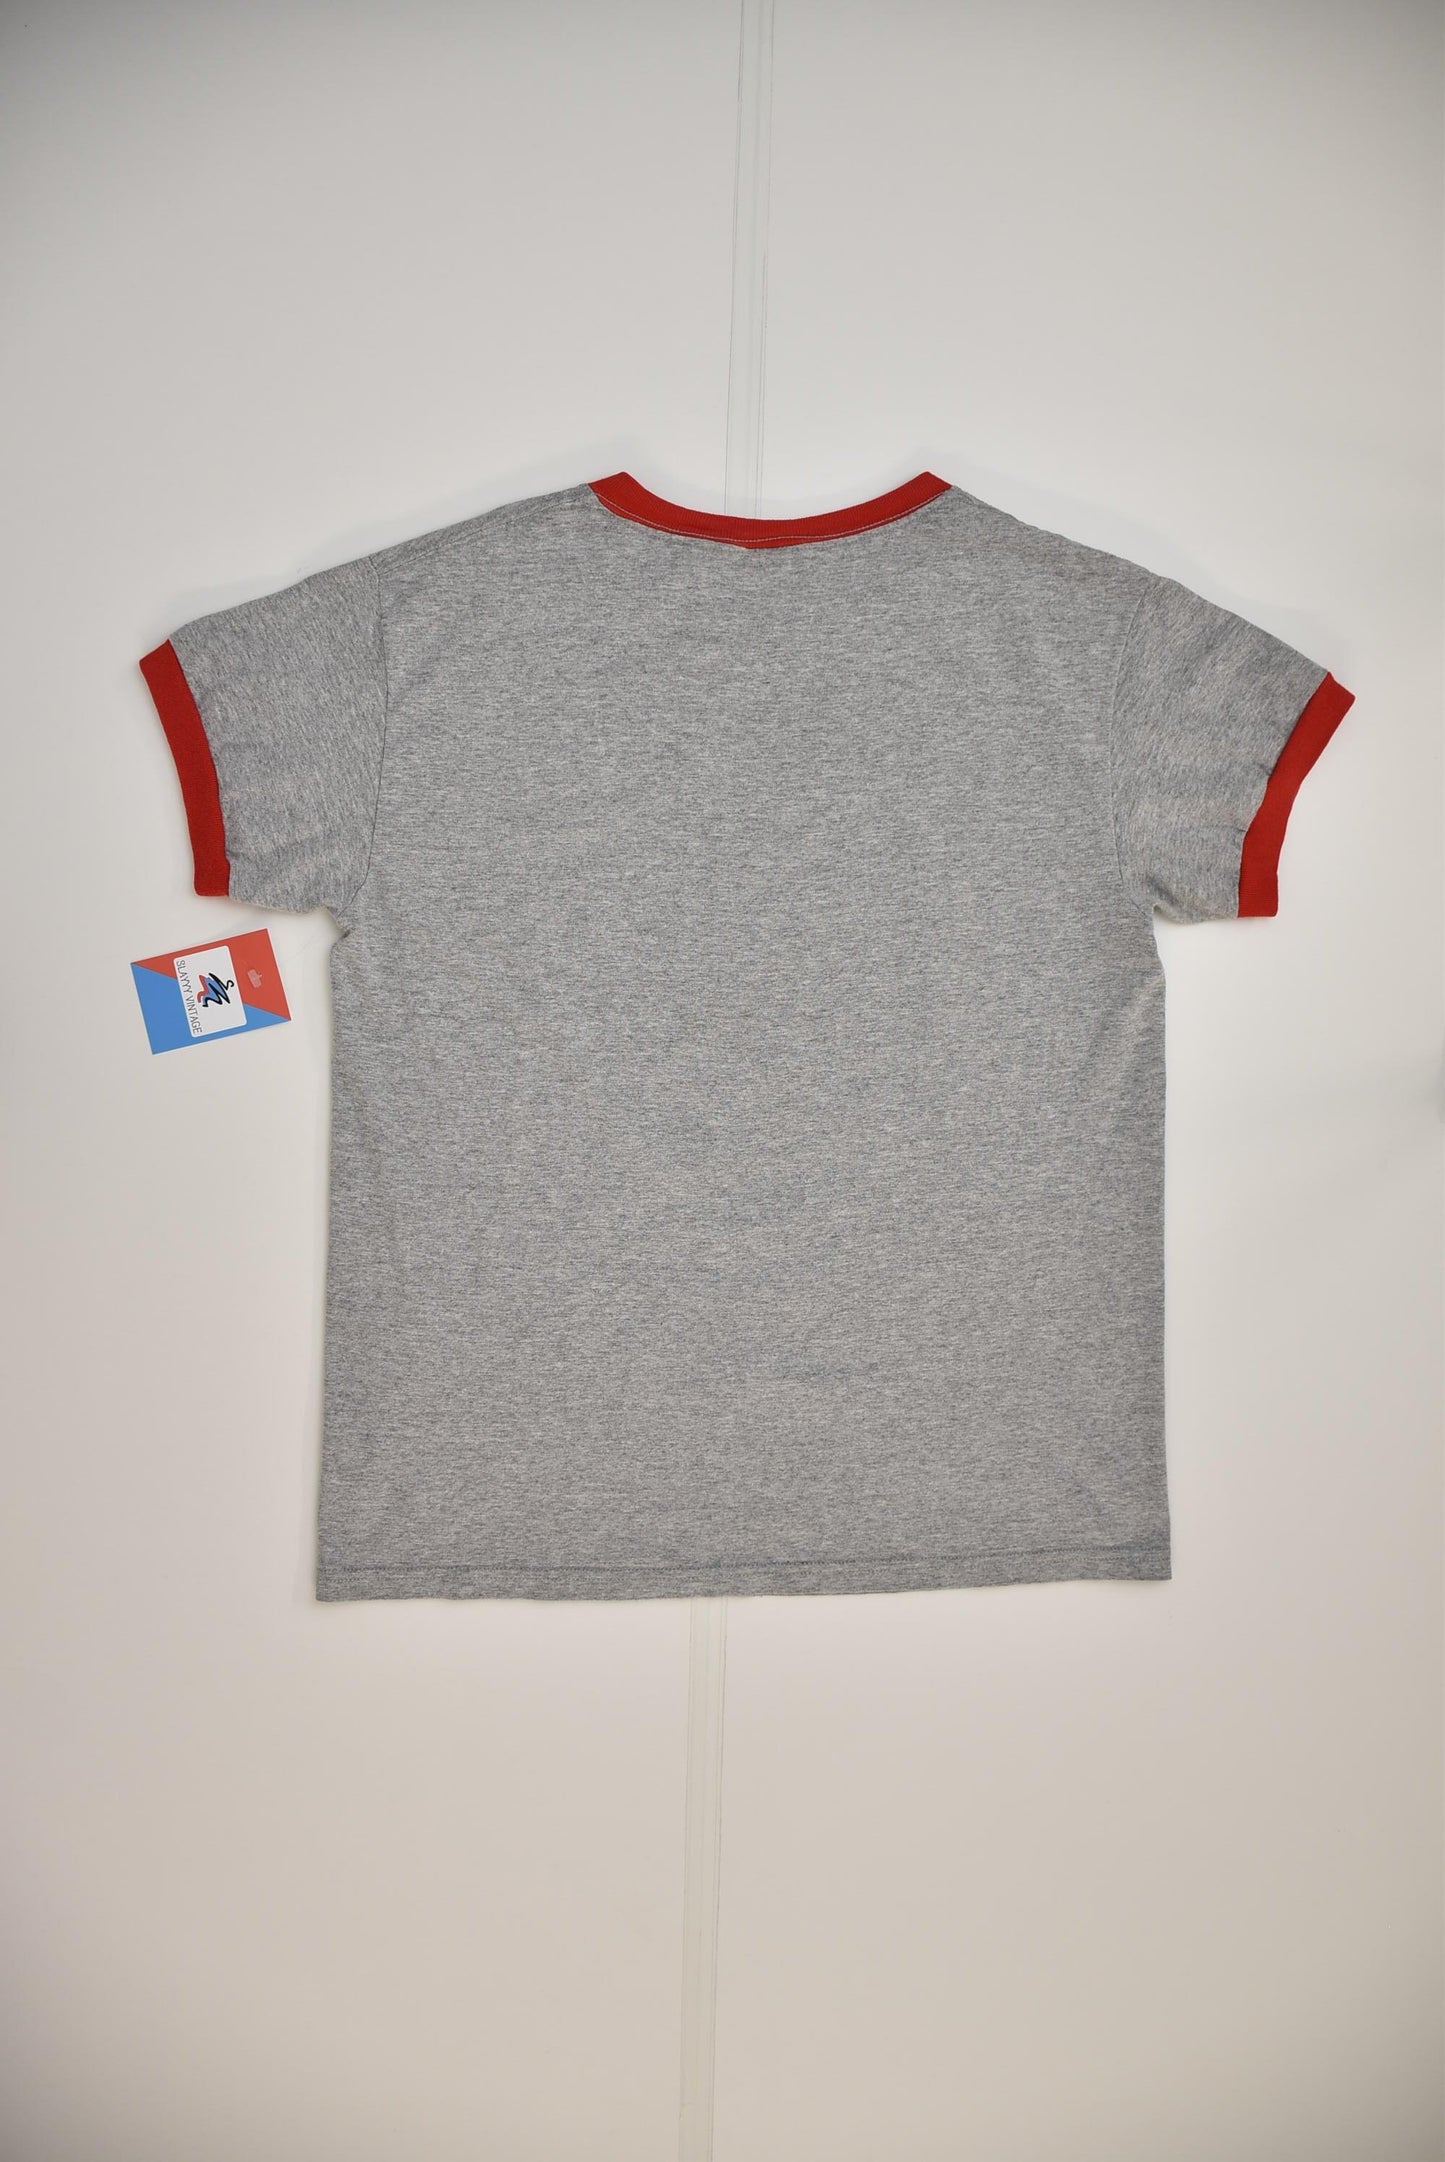 1996 Chicago Bulls Taz T-shirt (S)